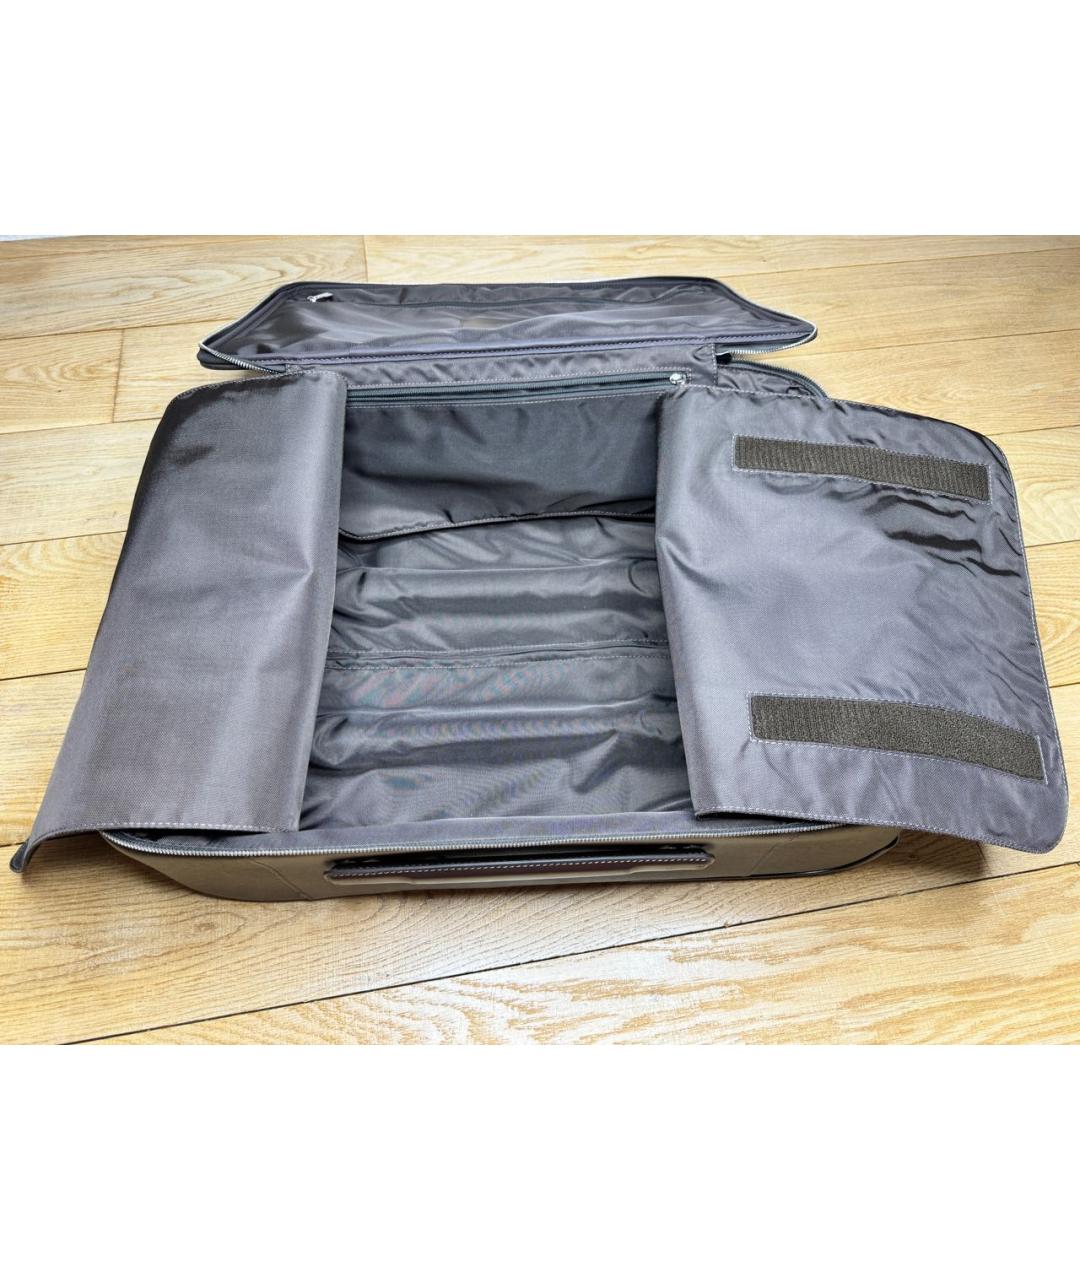 LOUIS VUITTON PRE-OWNED Коричневый кожаный чемодан, фото 3